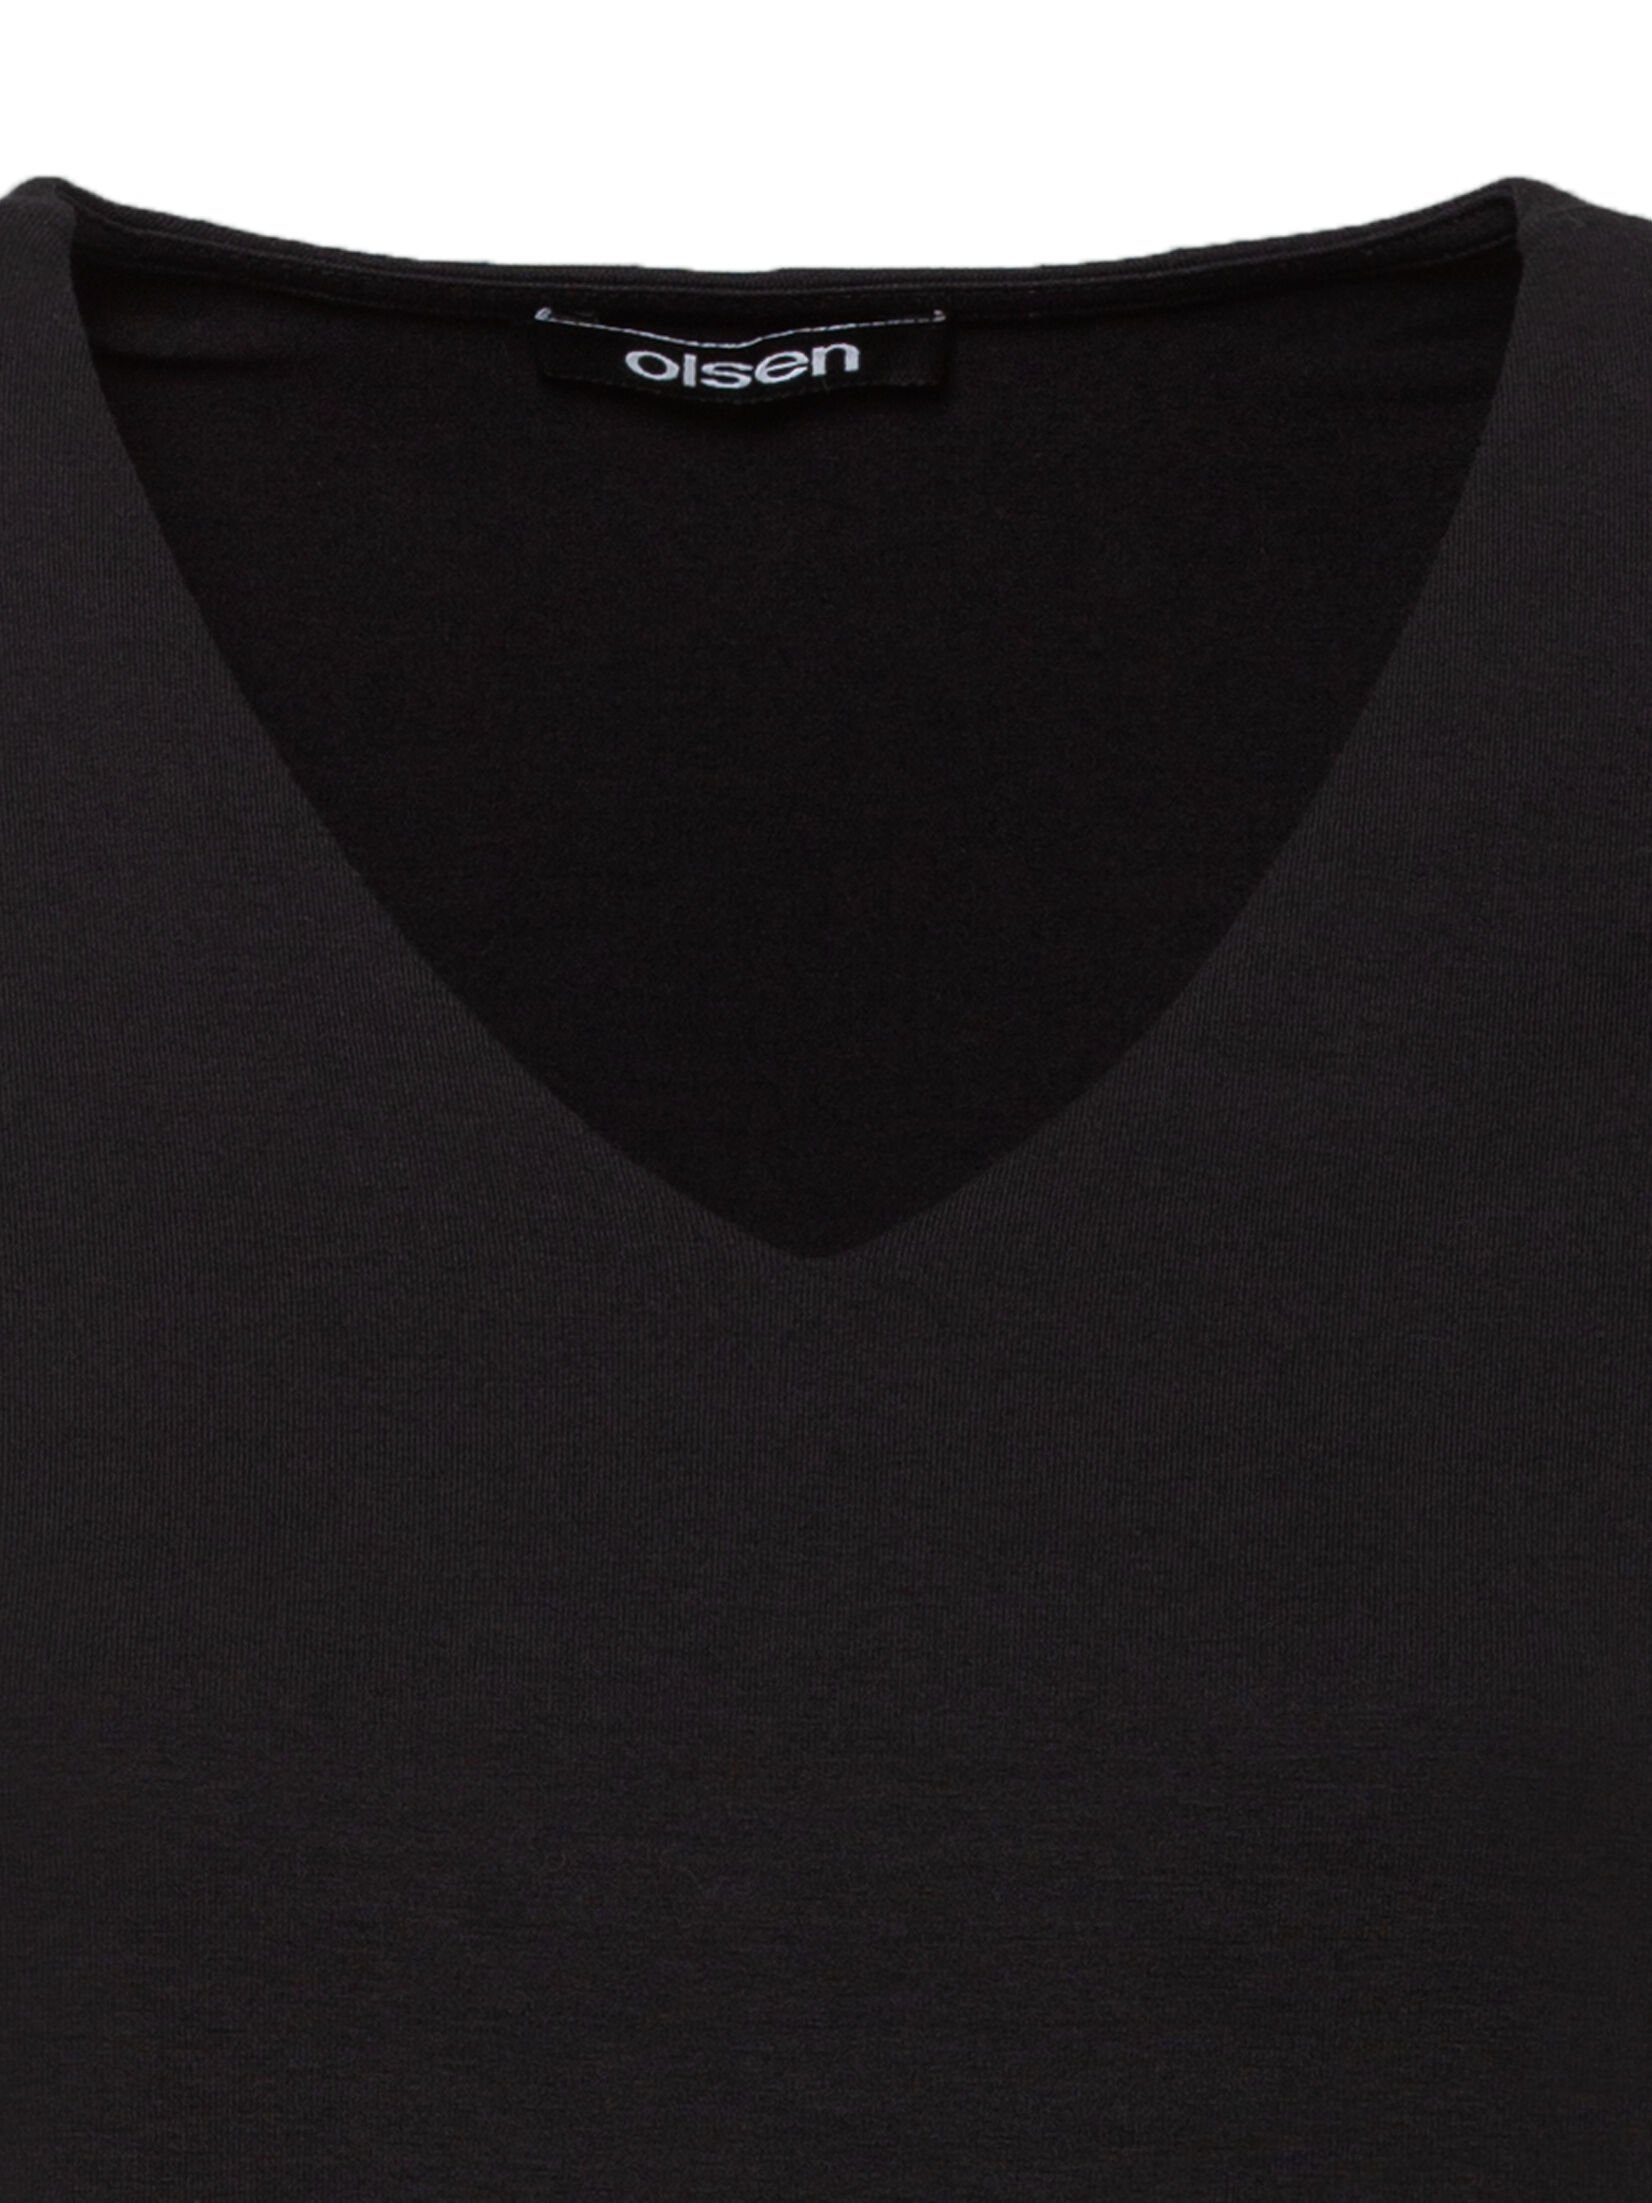 Olsen Uni-Look V-Shirt Black im